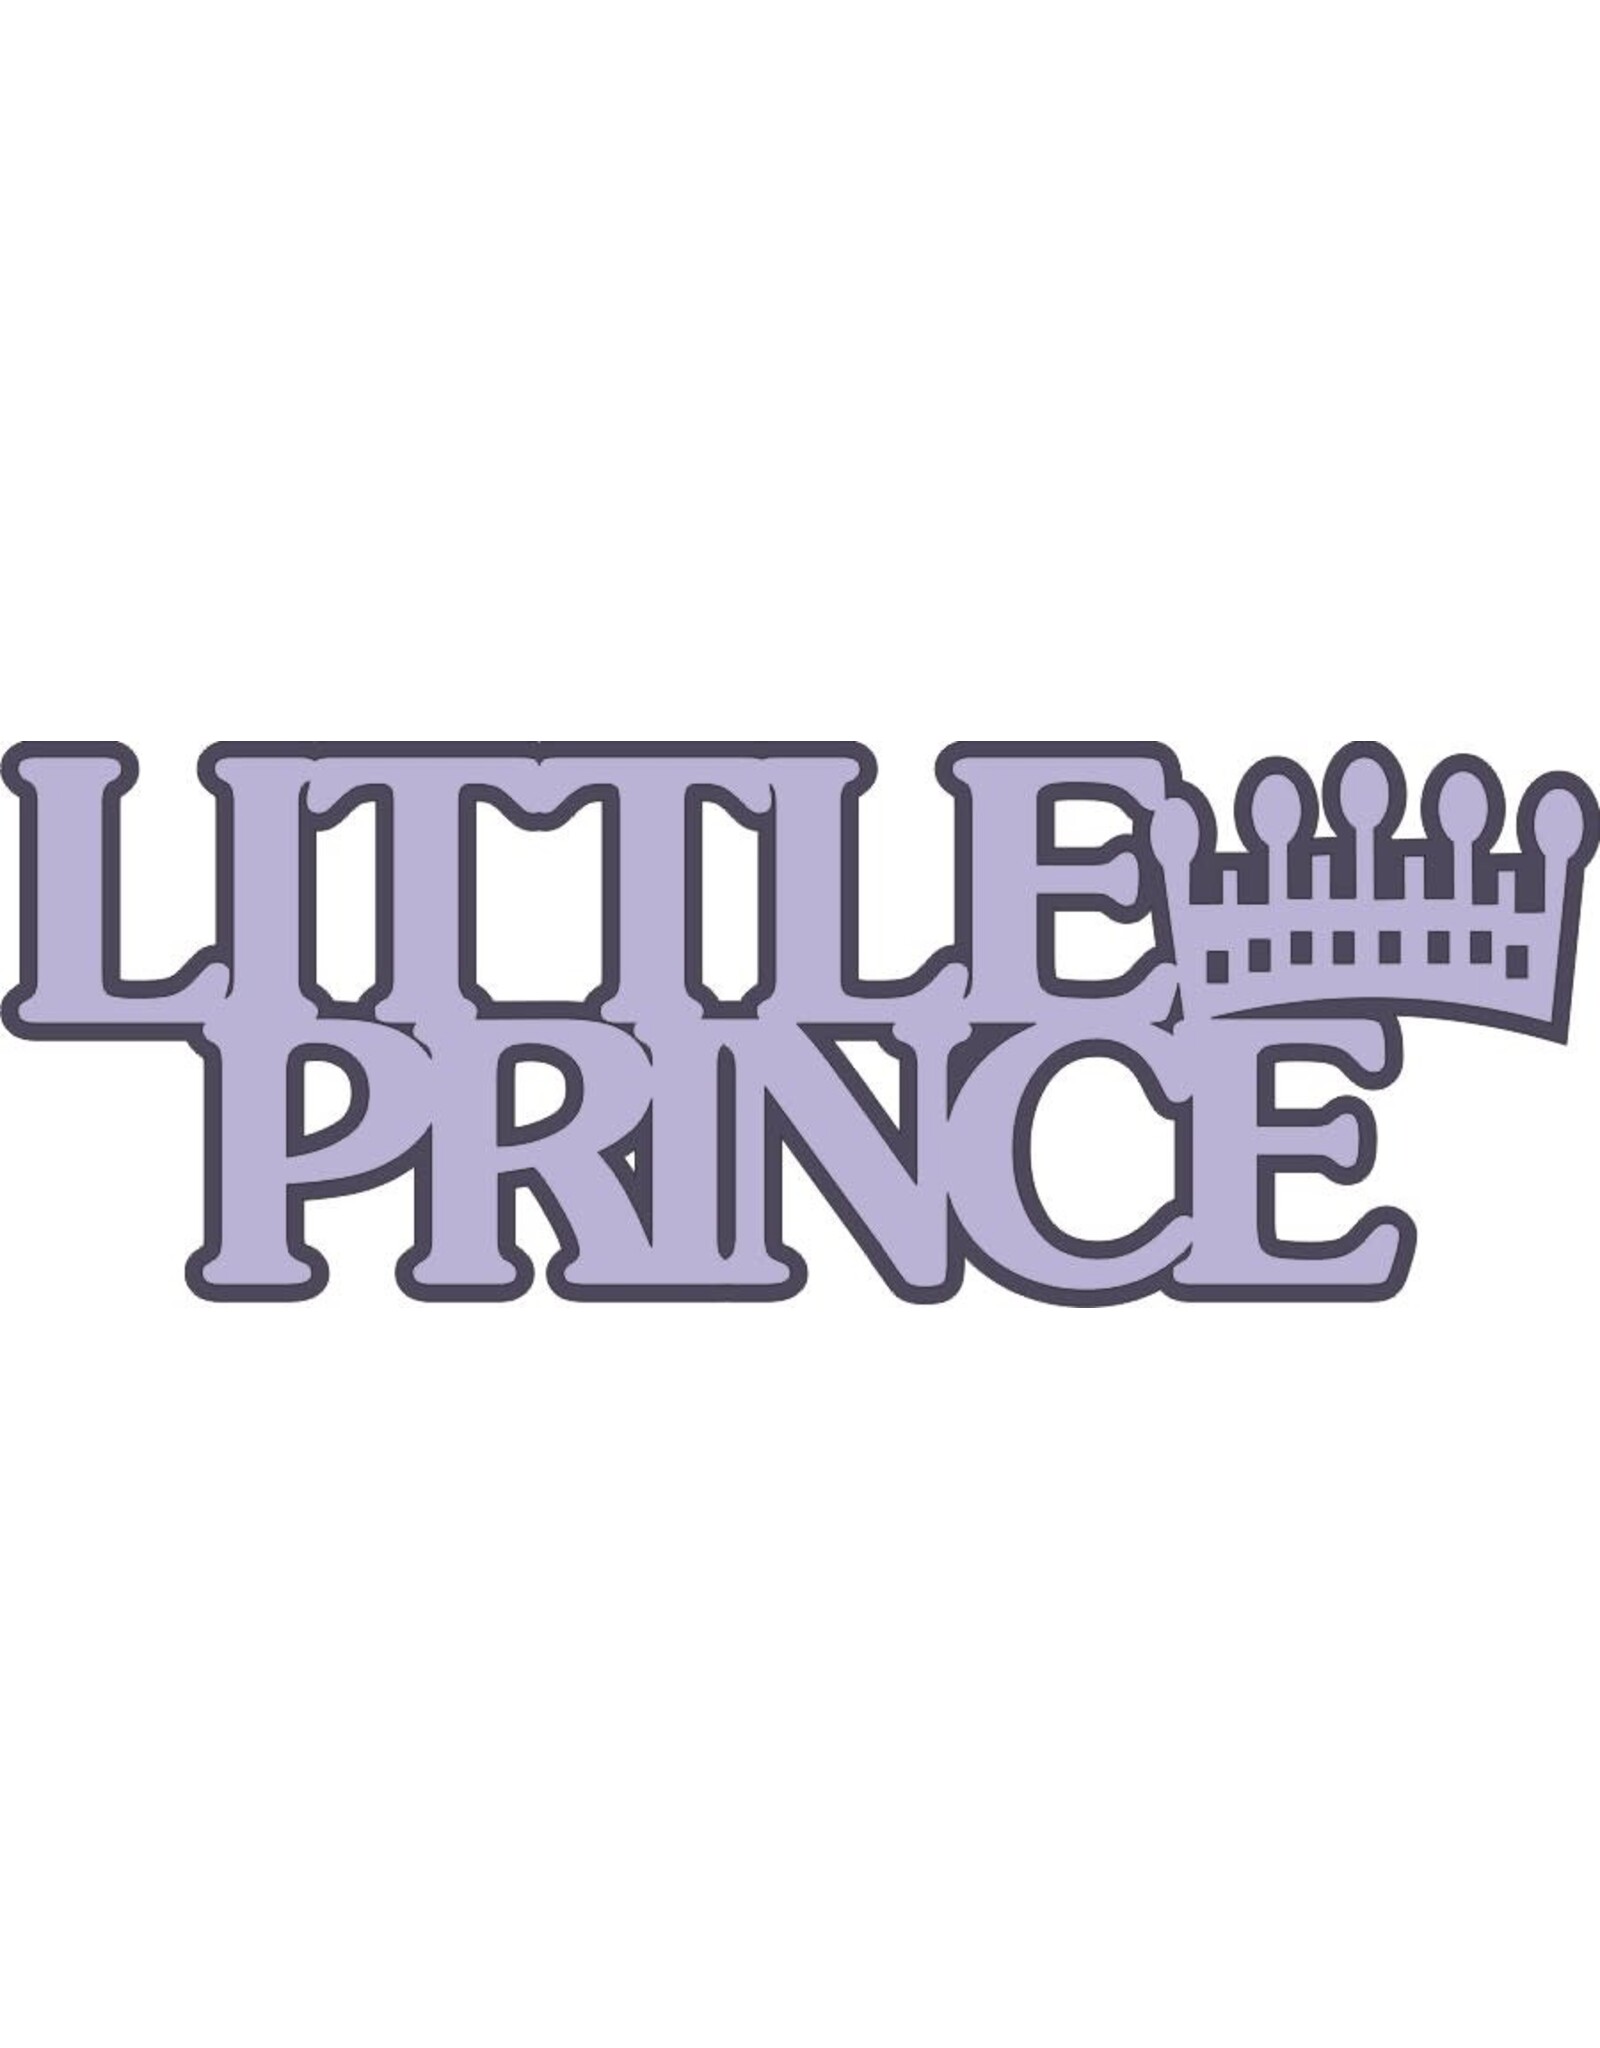 Little prince banner (blue)